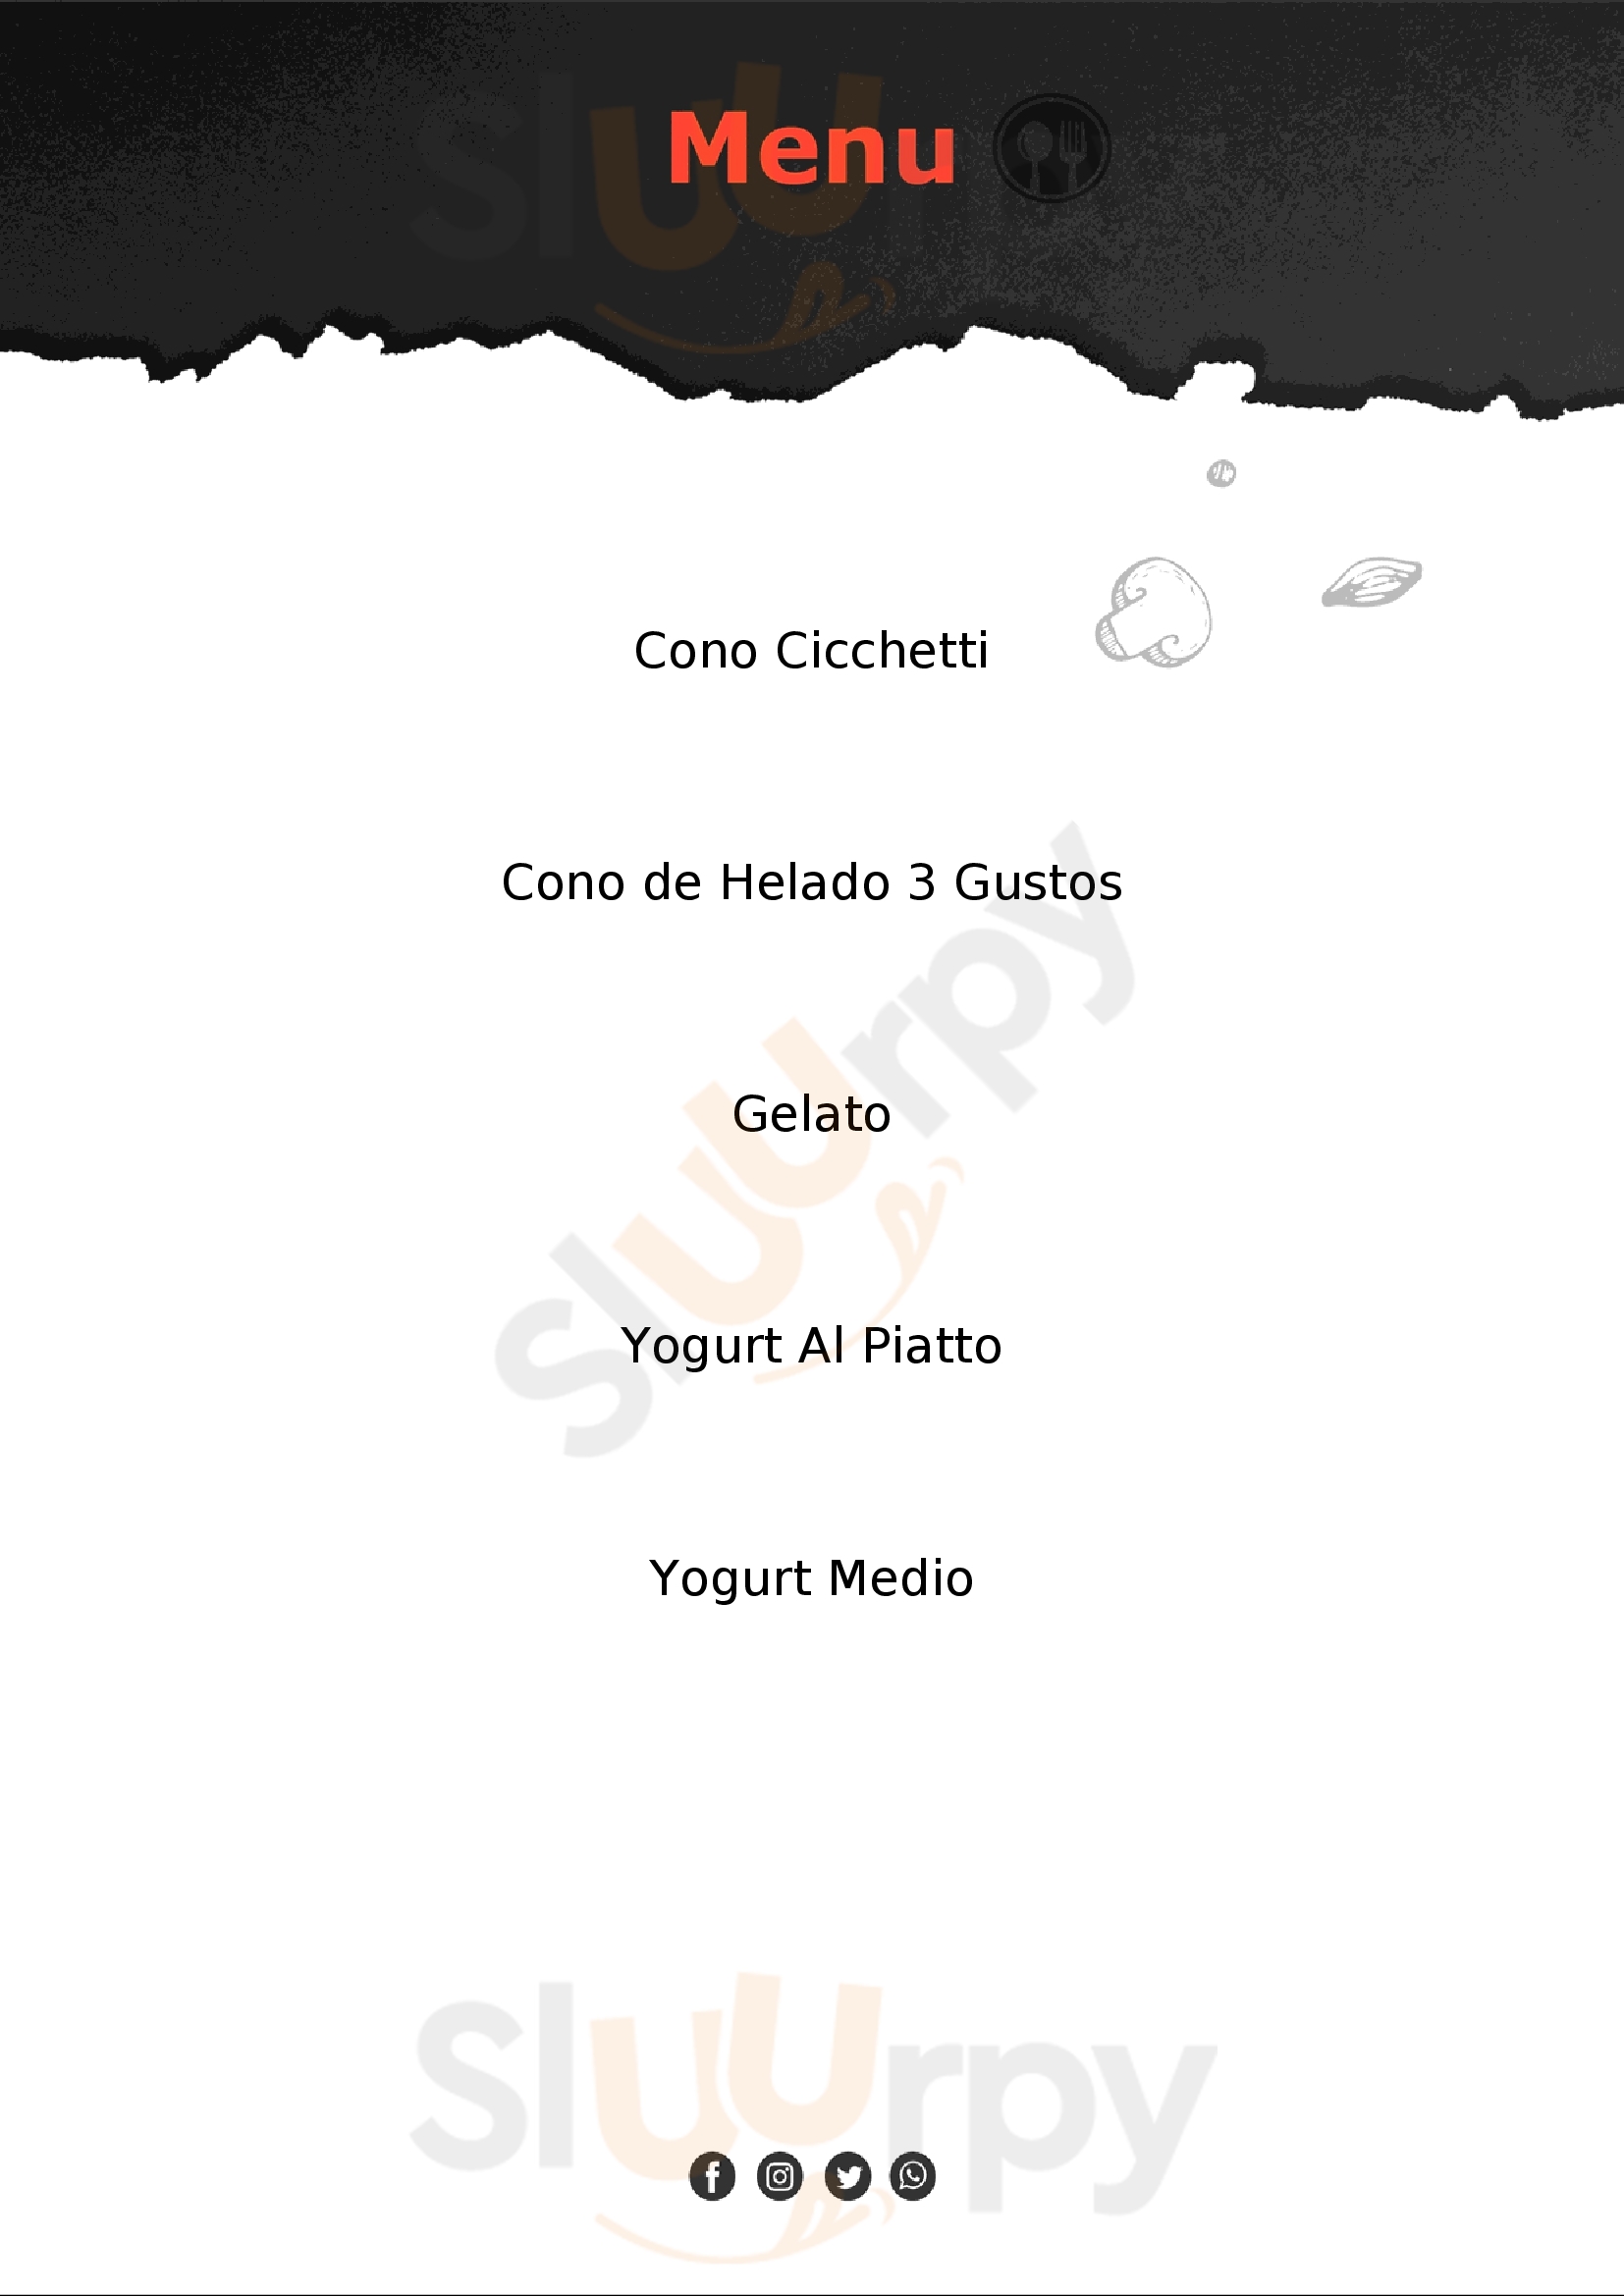 Yogurteria Cichetti Giulianova Giulianova menù 1 pagina